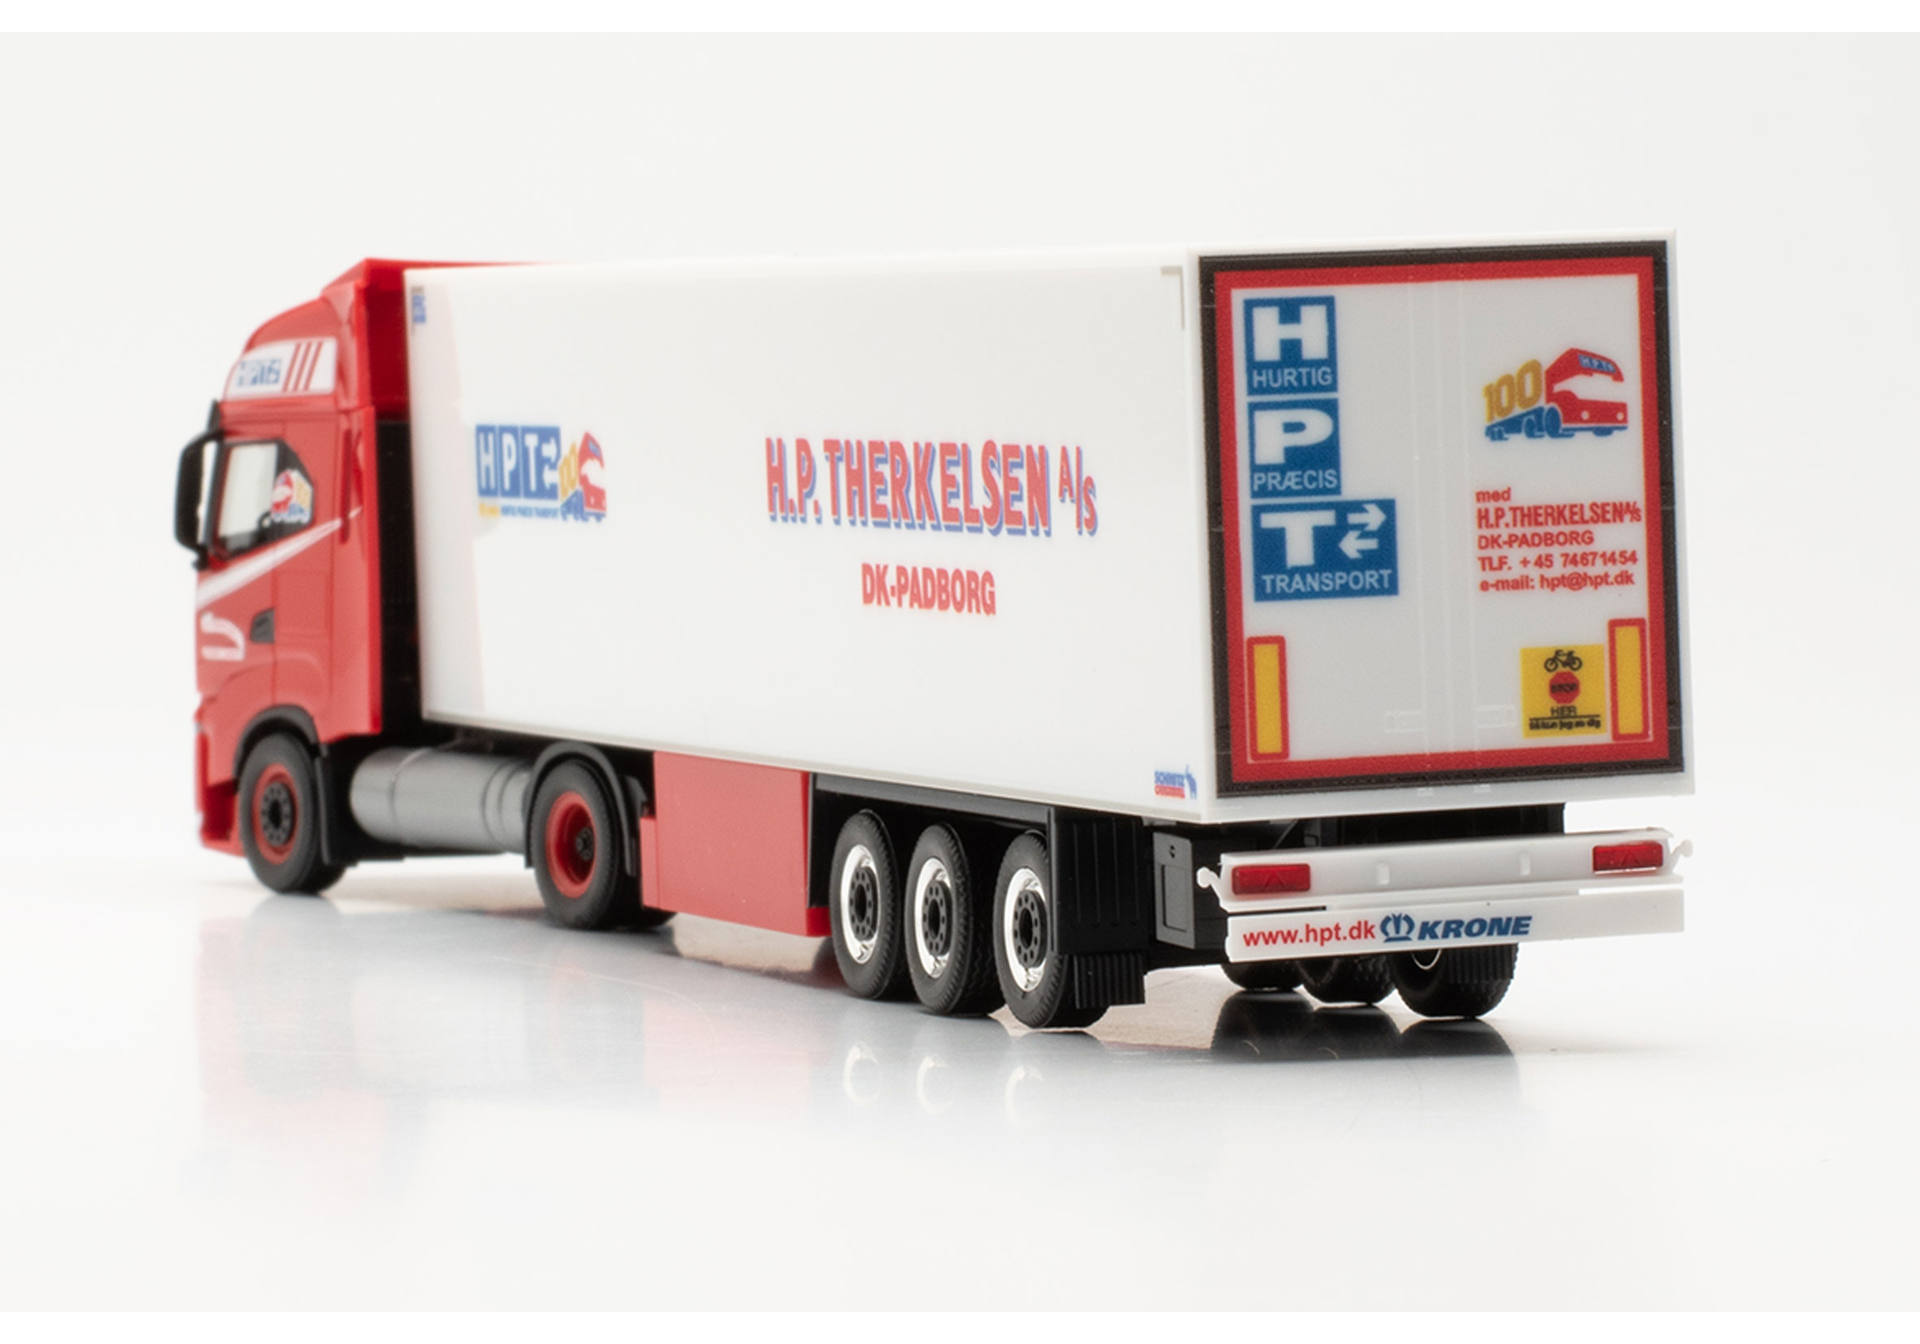 Iveco S-Way LNG refrigerated box semitrailer truck „H.P. Therkelsen“ (Denmark/Padborg)